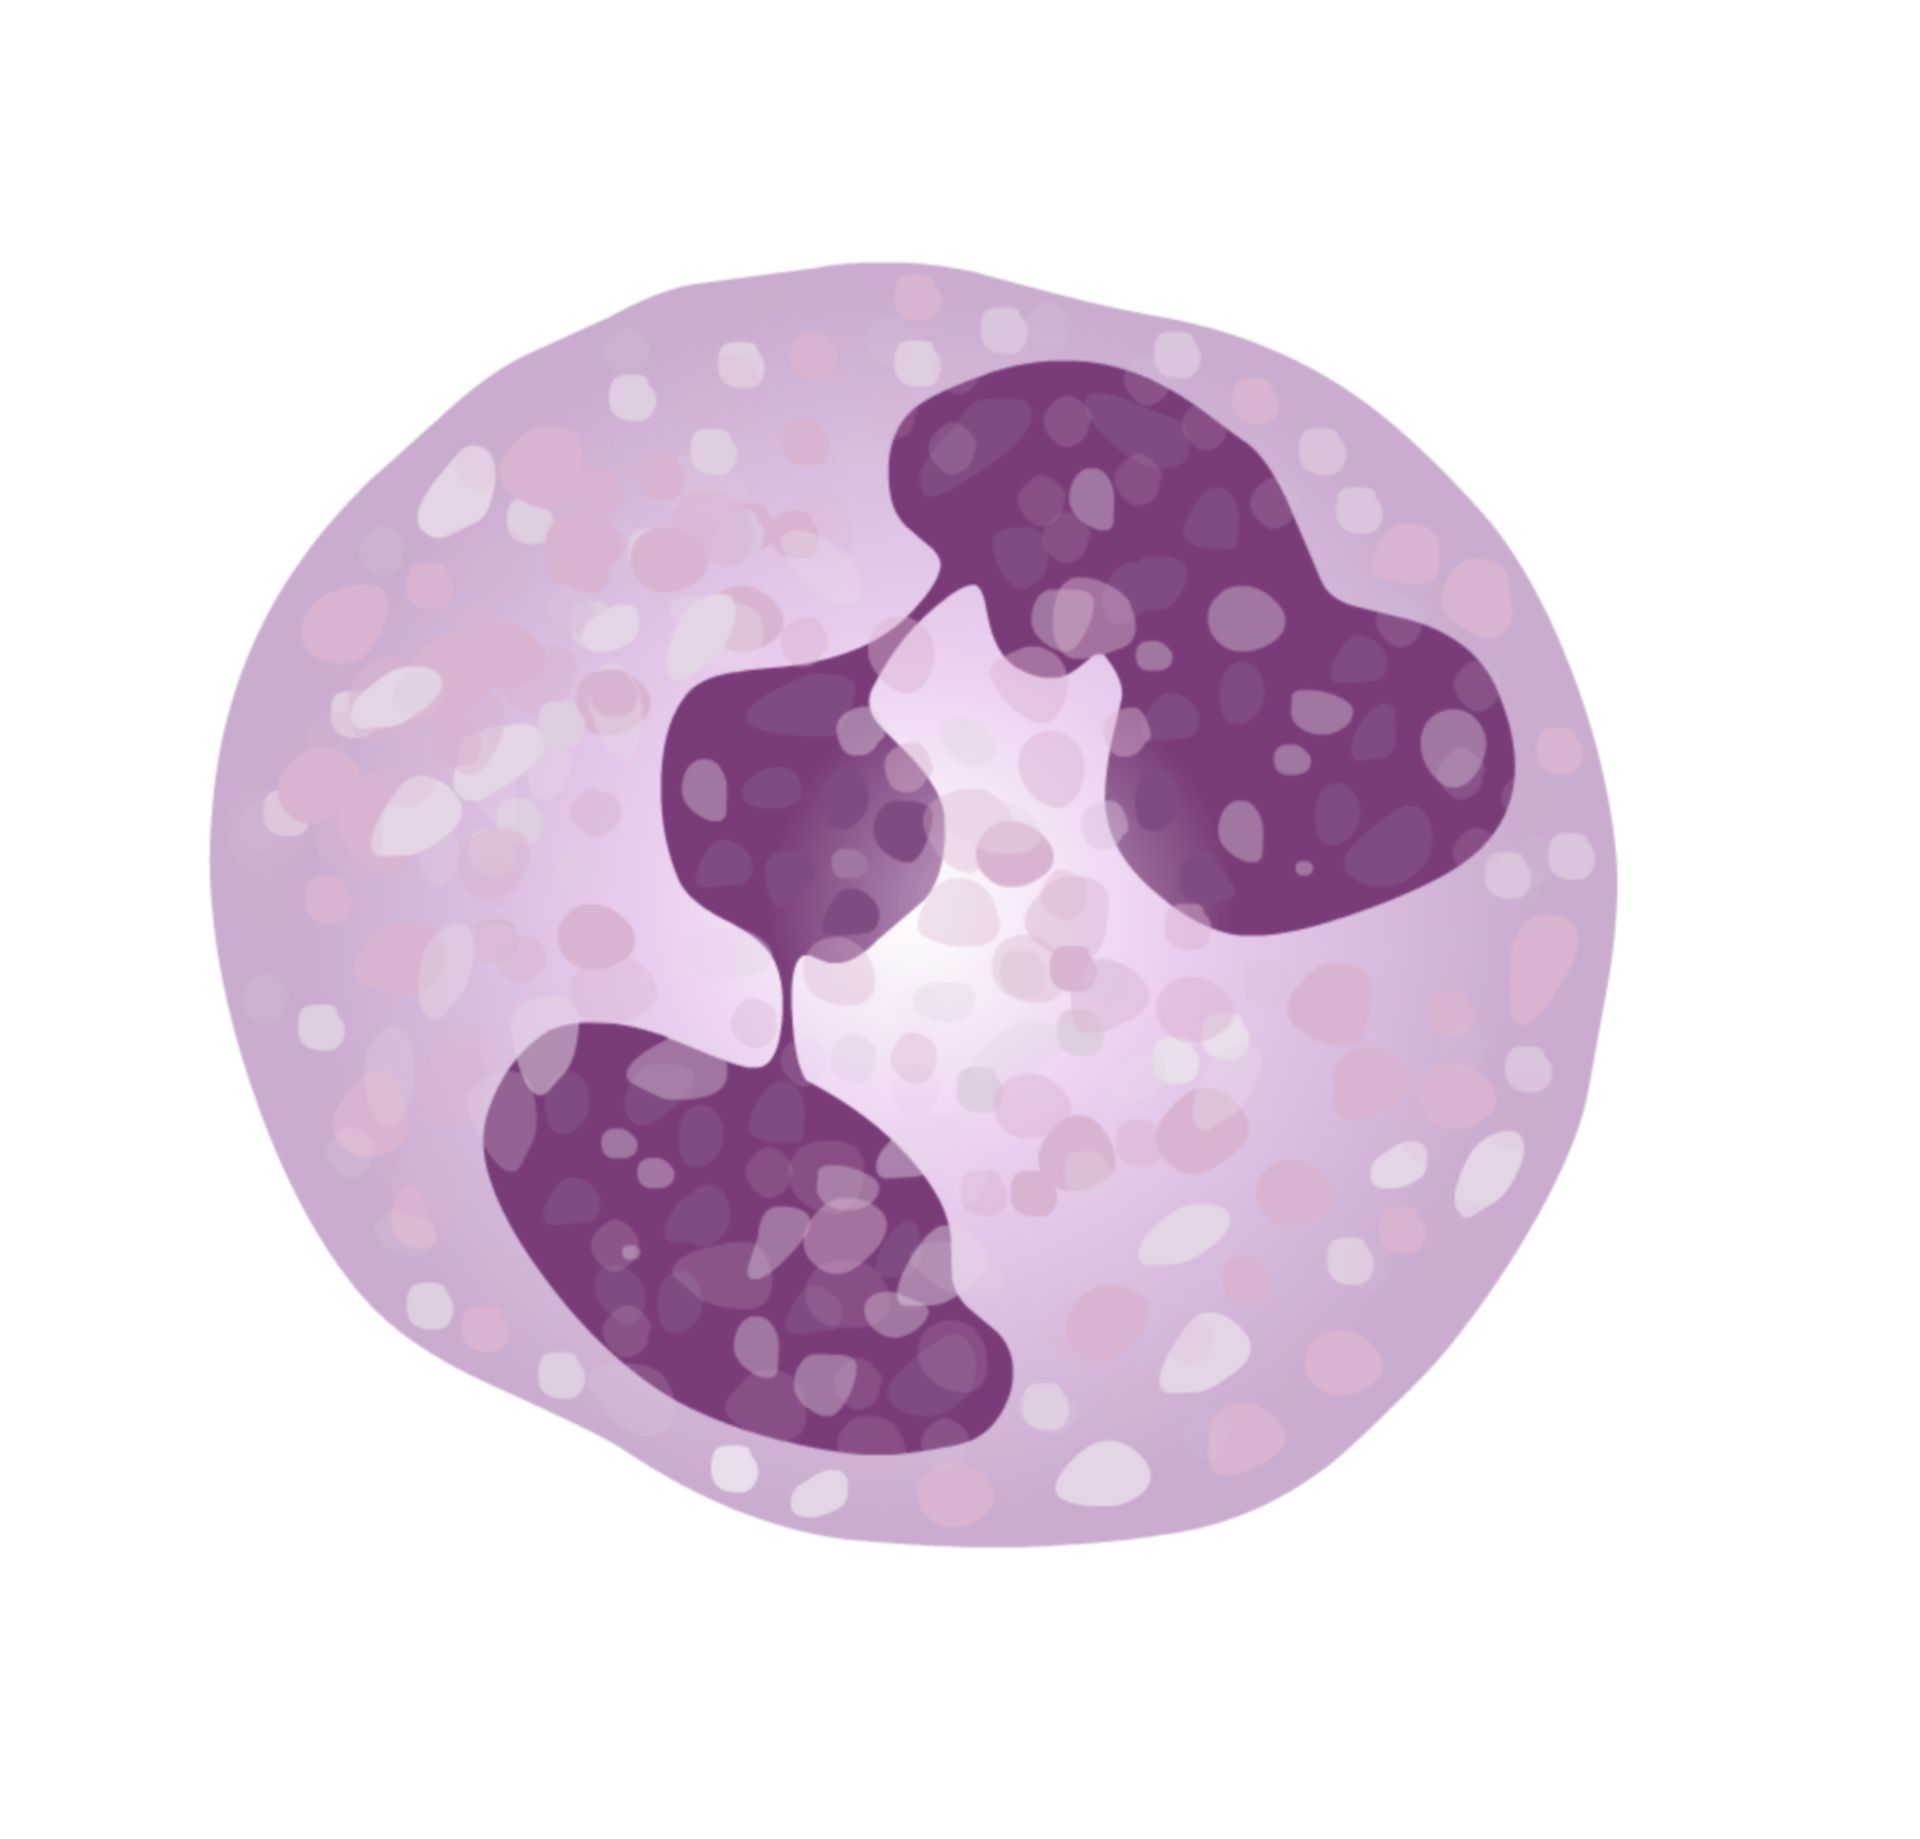 Segmented granulocyte